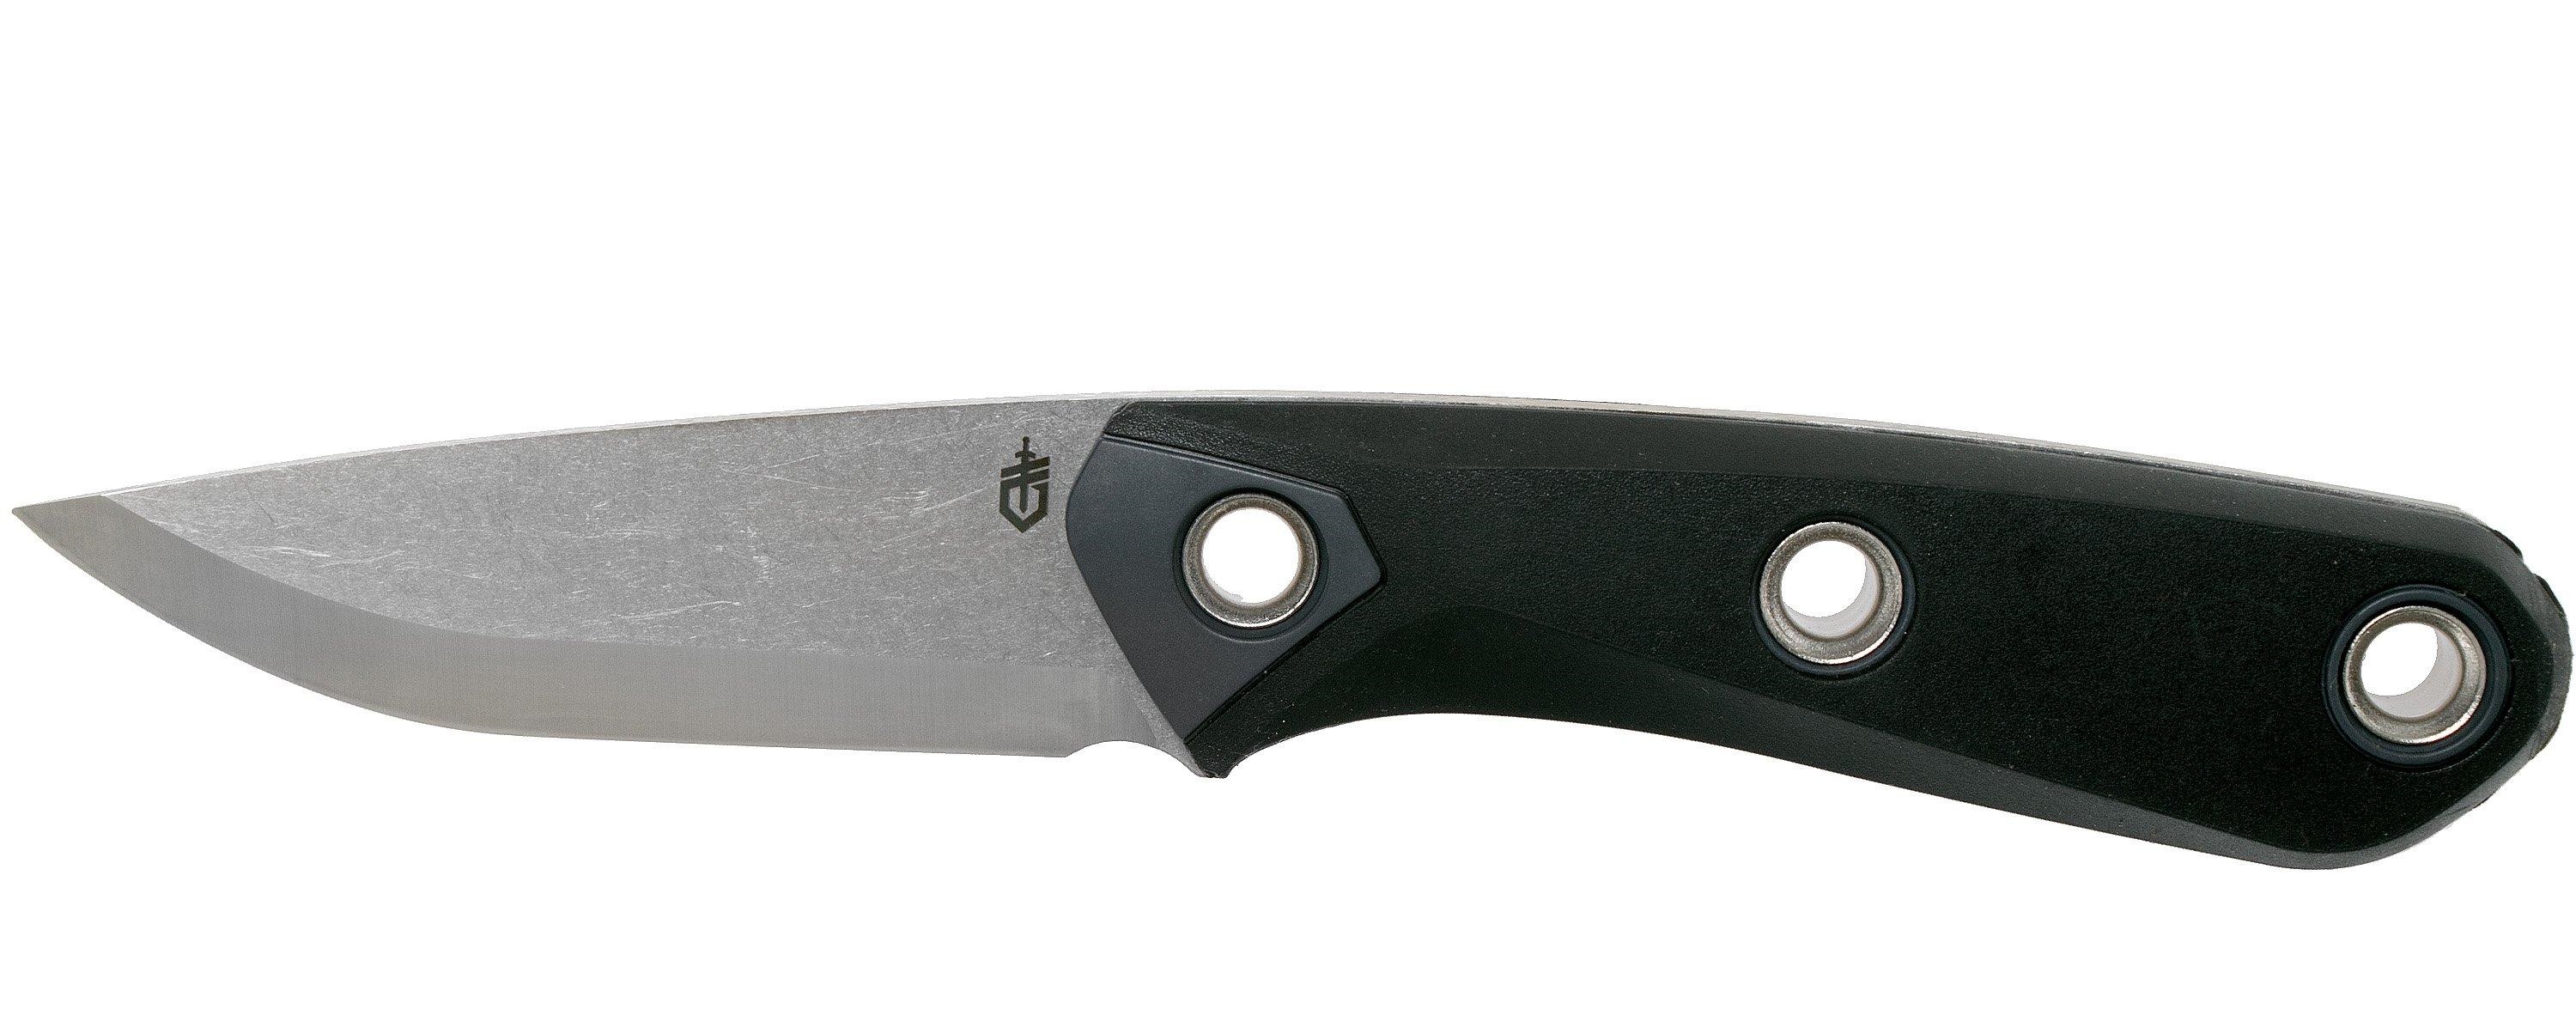 Нож Principle Bushcraft Fixed Black, GERBER, 30-001659